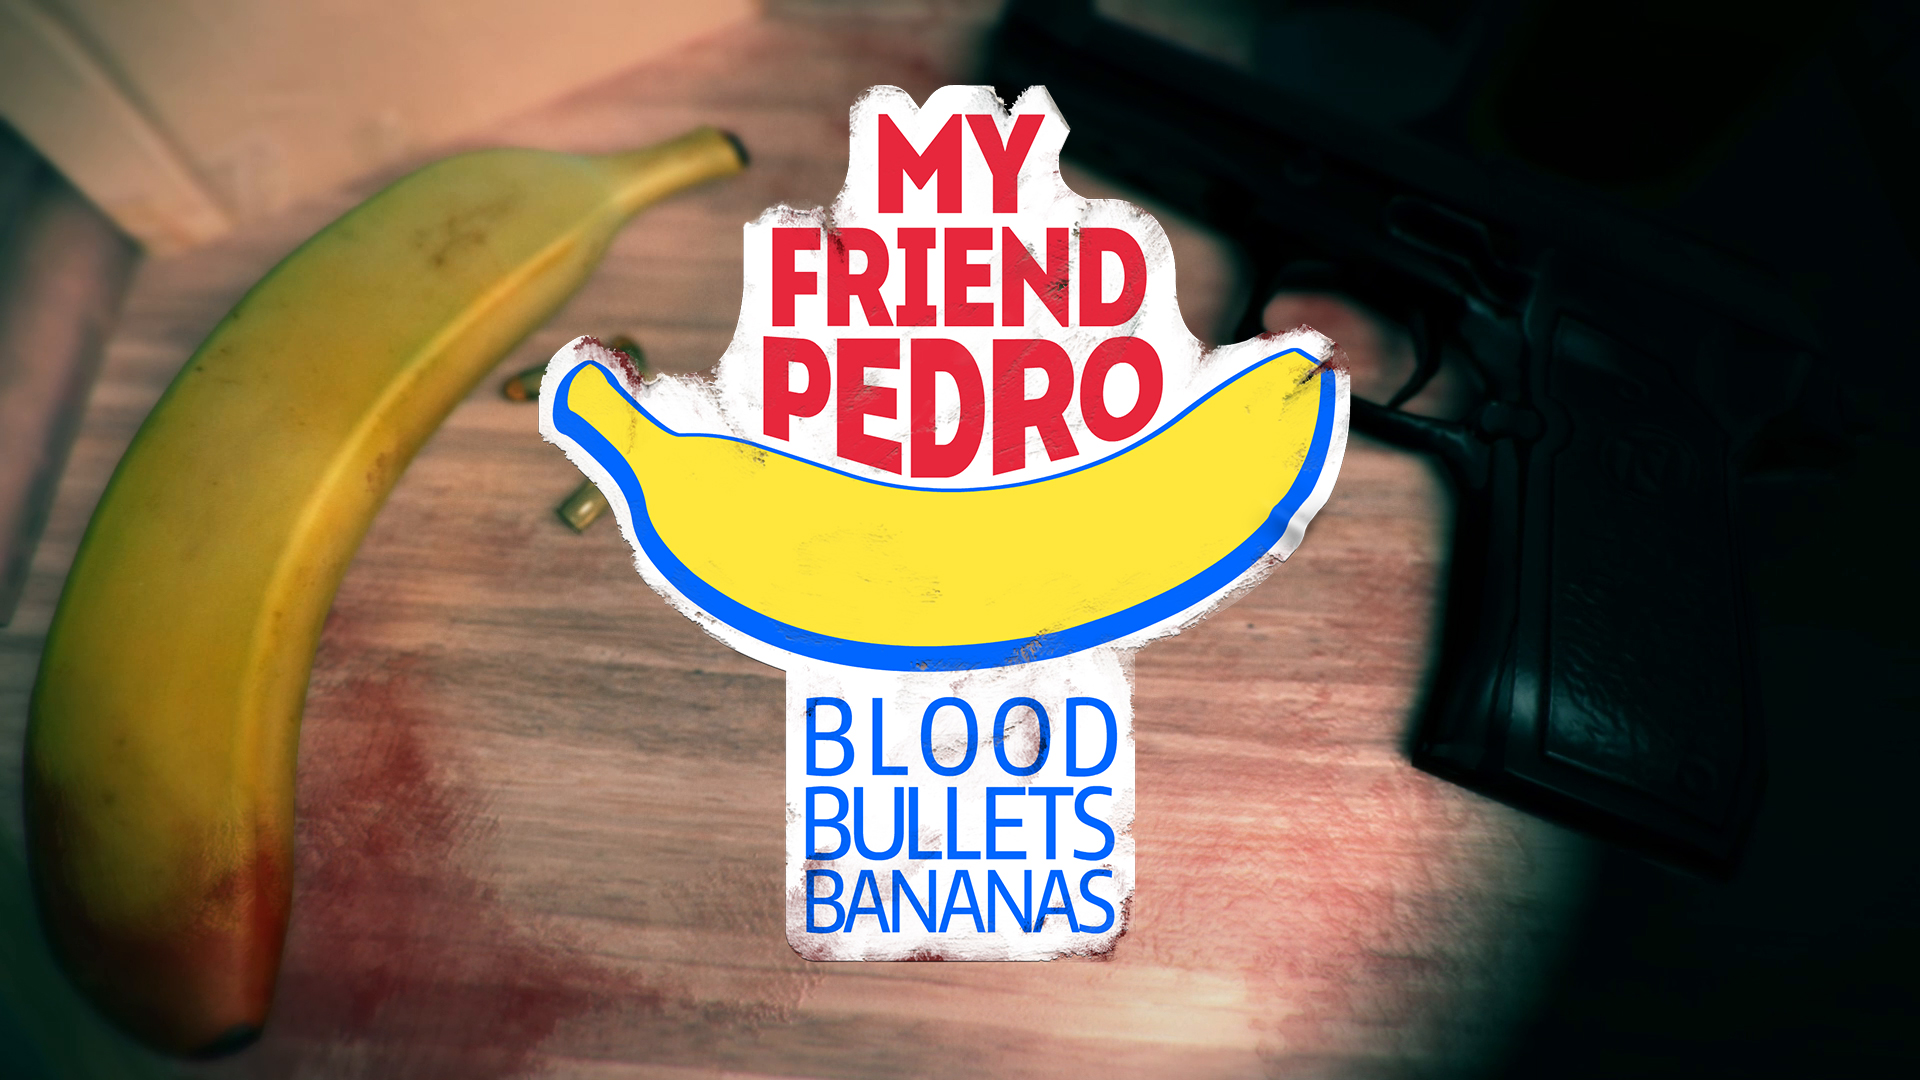 My friend paul. Игра my friend Pedro. Игра про банана Педро. Мой друг Педро. My friend Pedro банан.